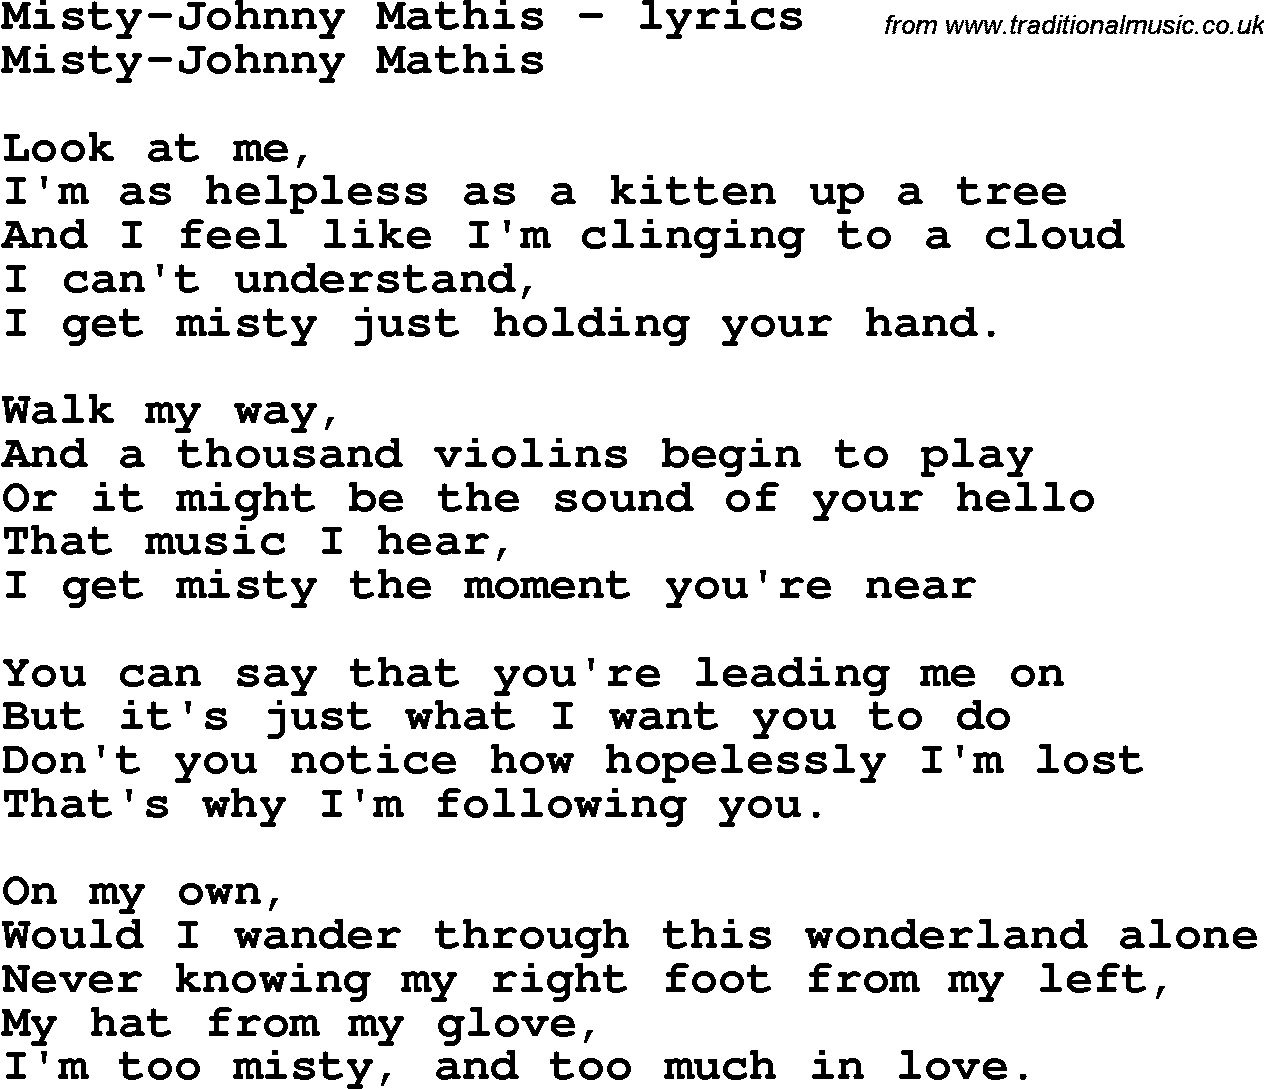 Love Song Lyrics for: Misty-Johnny Mathis